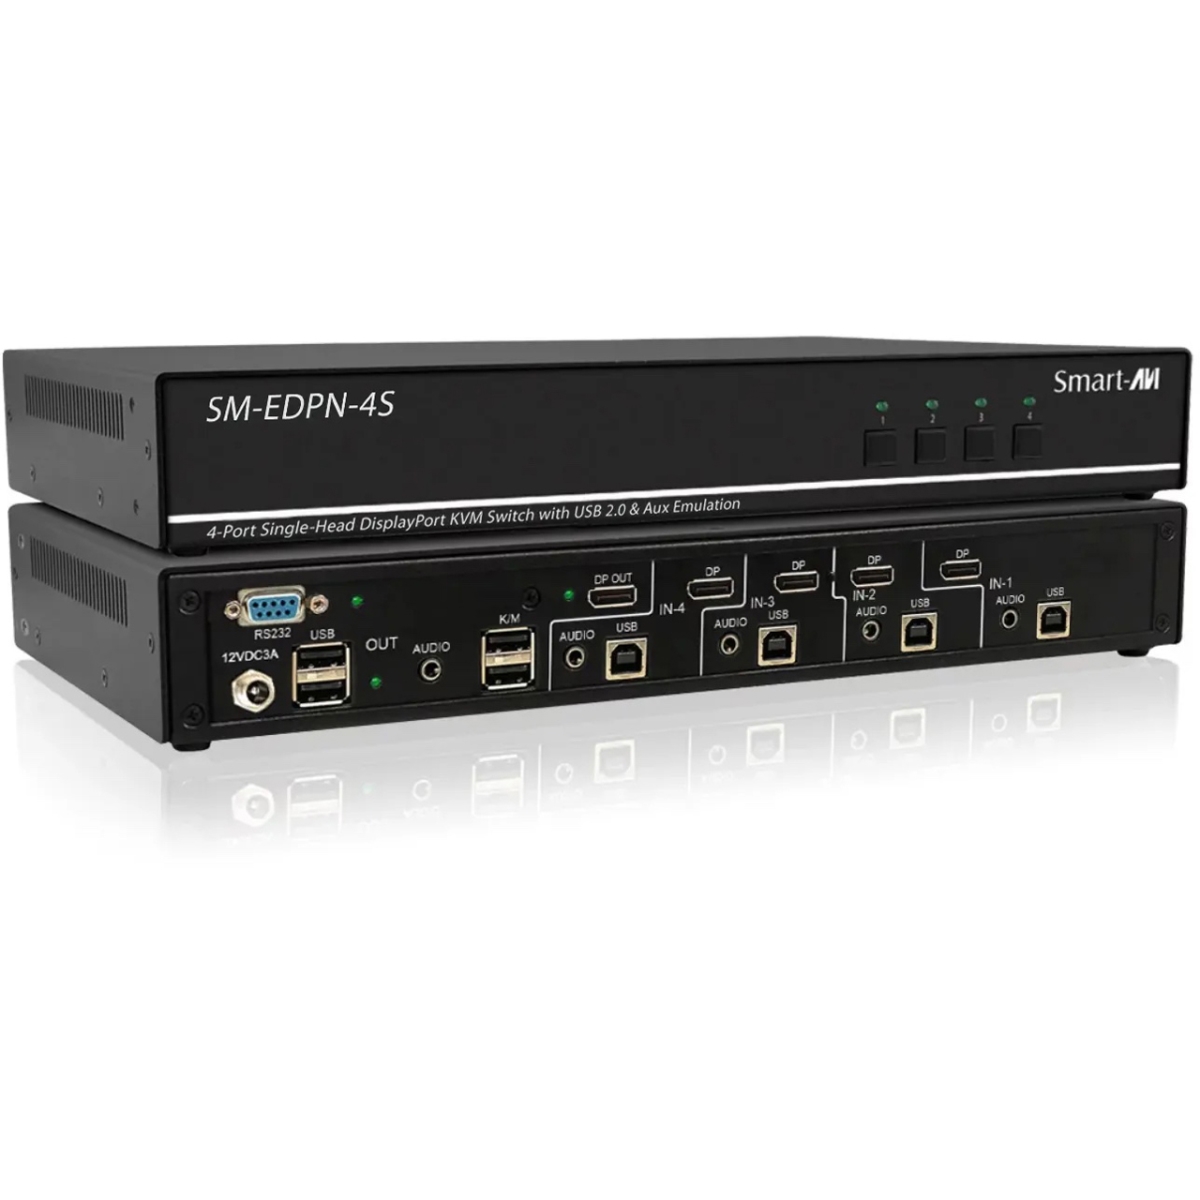 Picture of Smart-AVI SAVI-SM-EDPN-4S SM-EDPN-4S Single Head 4-Port UHD 4k at 60 DP KVM Switch with EDID Aux Emulation